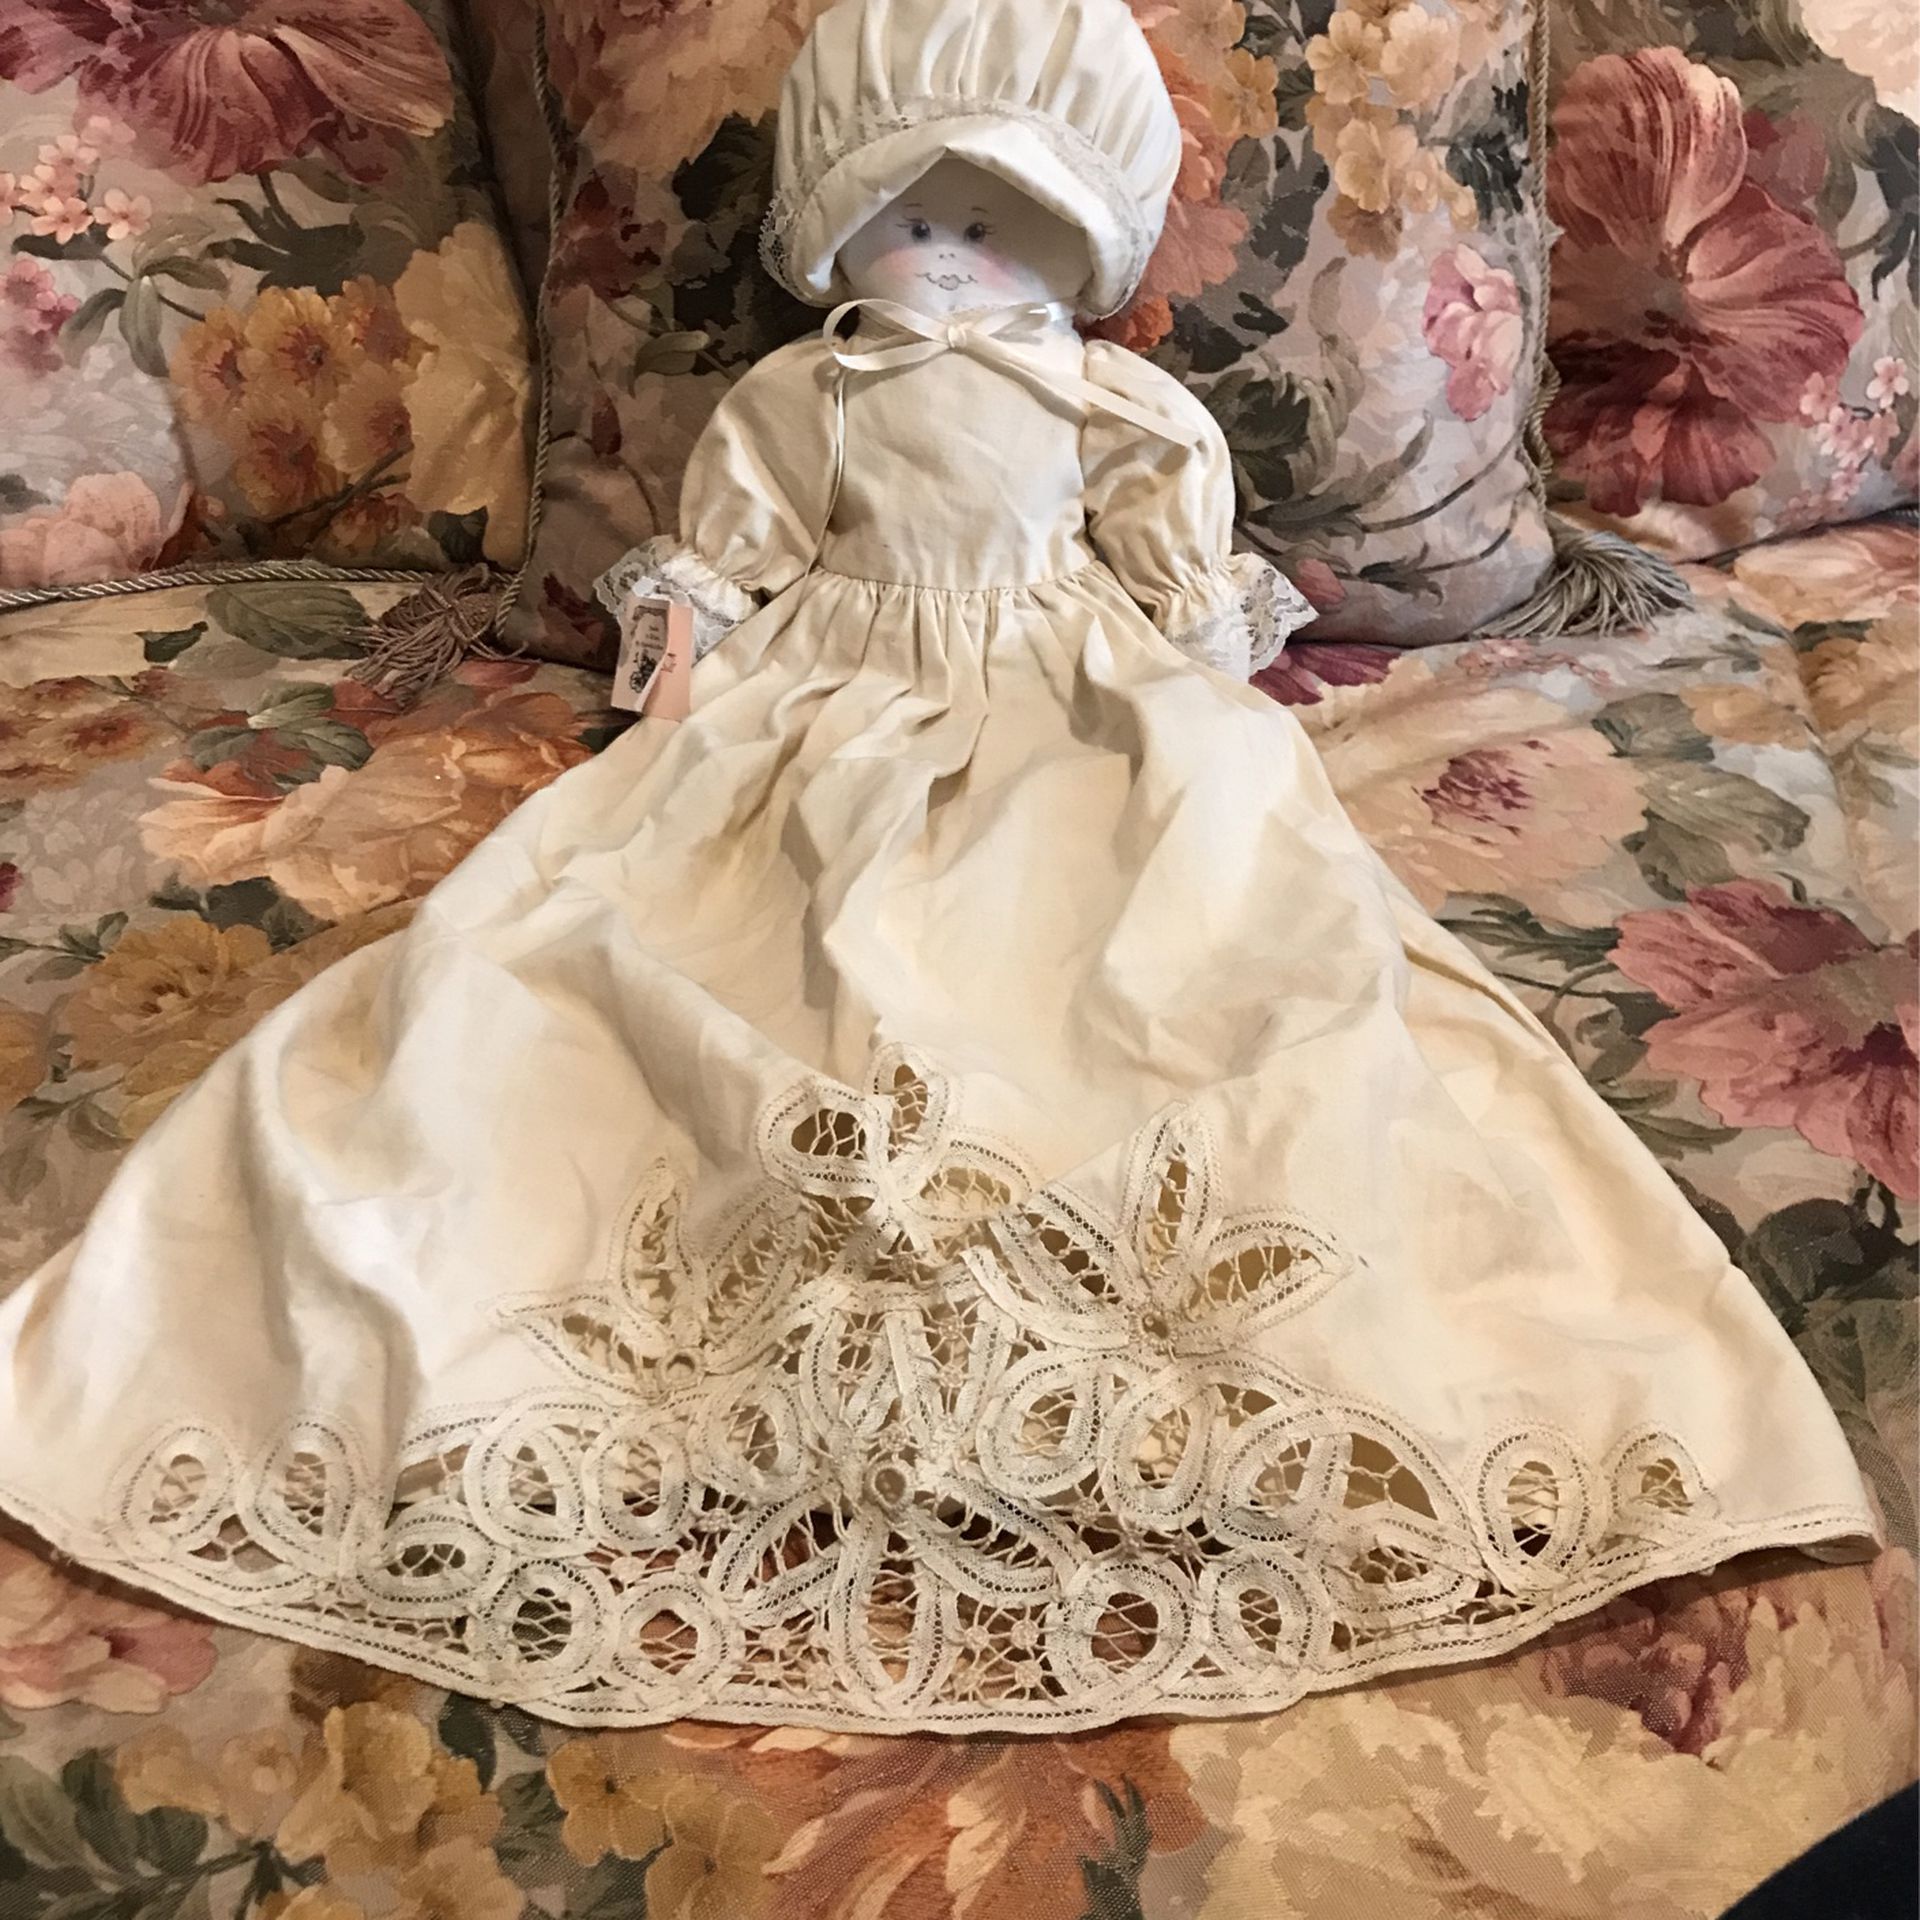 Adorably Cute!!! Soft Cotton Doll With pretty Cotton Lace Dress & Bonnet !!!